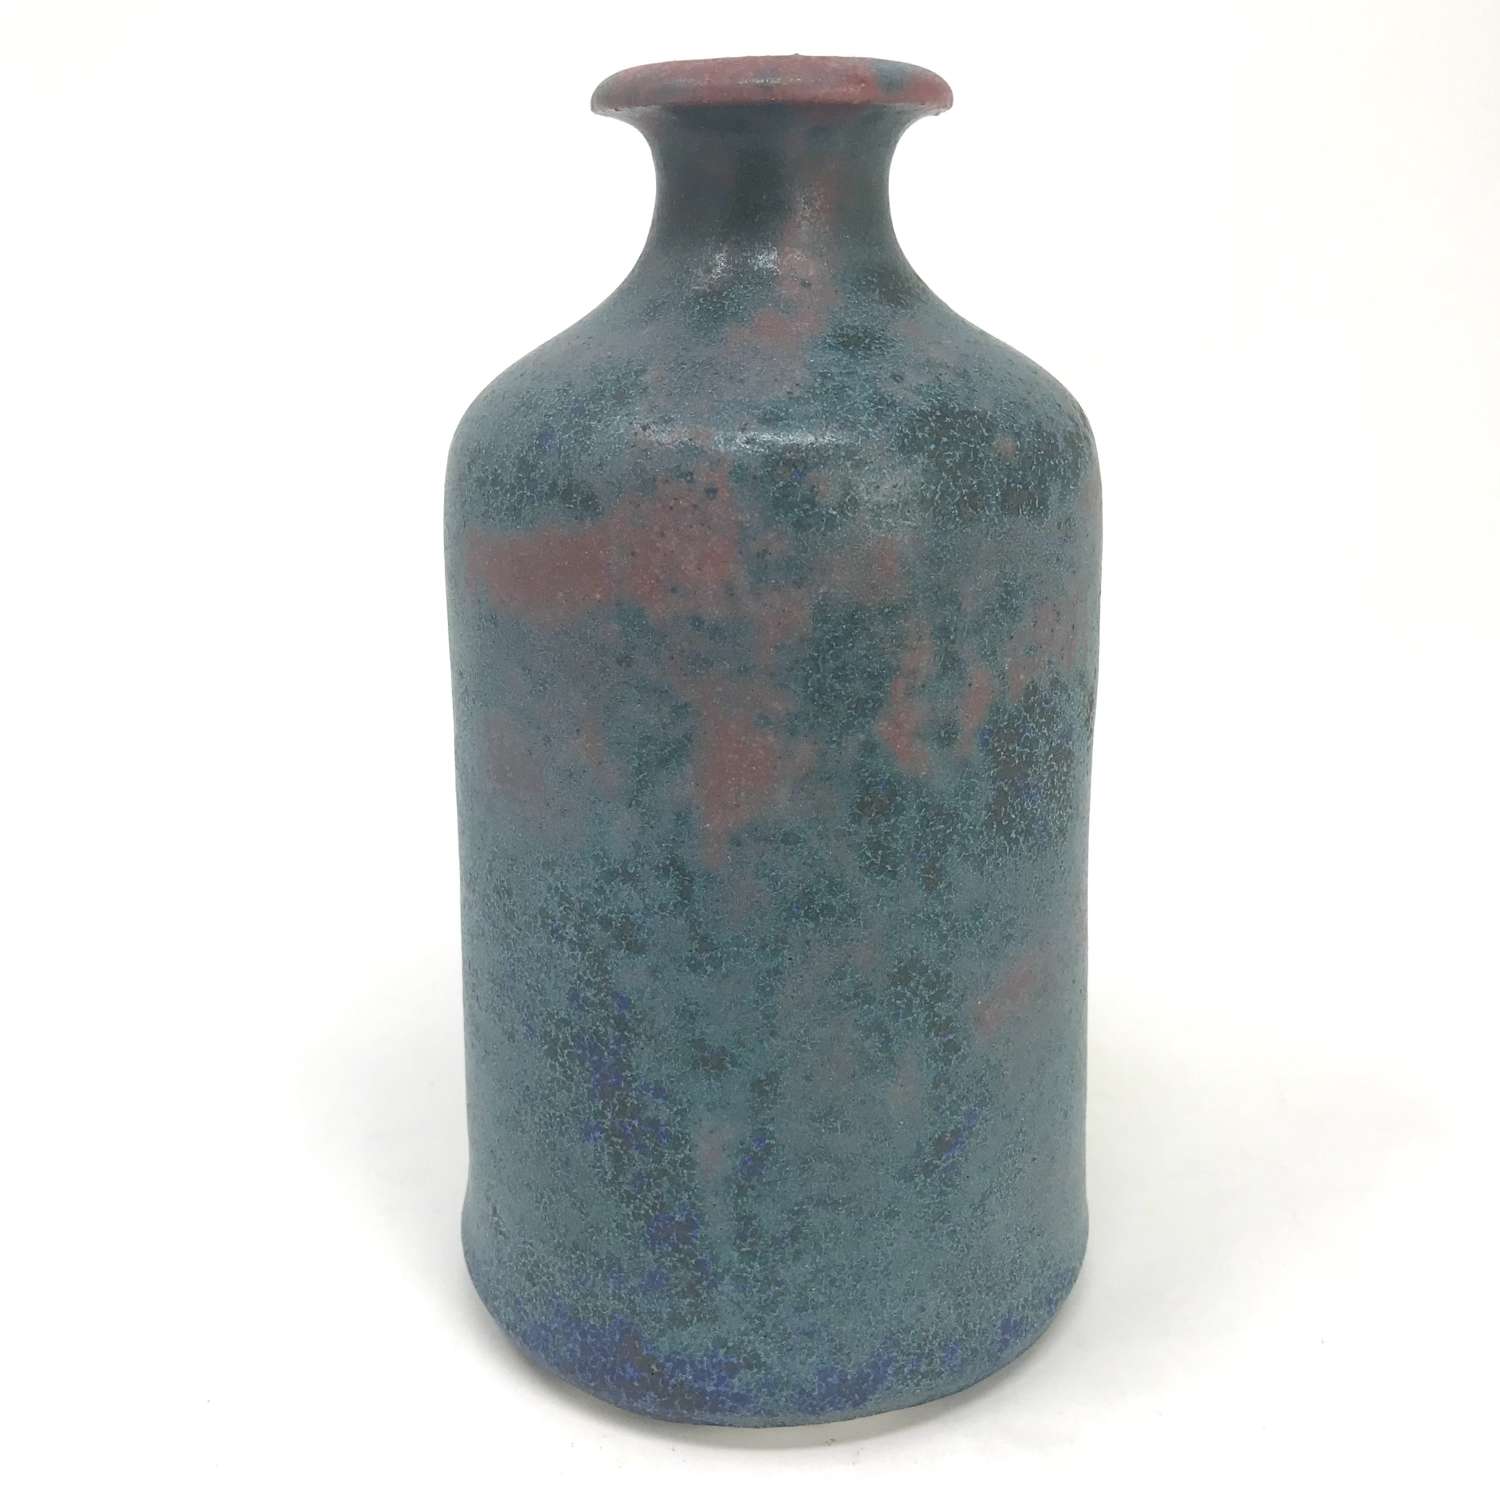 Margarete Schott studio ceramic vase with blue and purple glaze c1970s